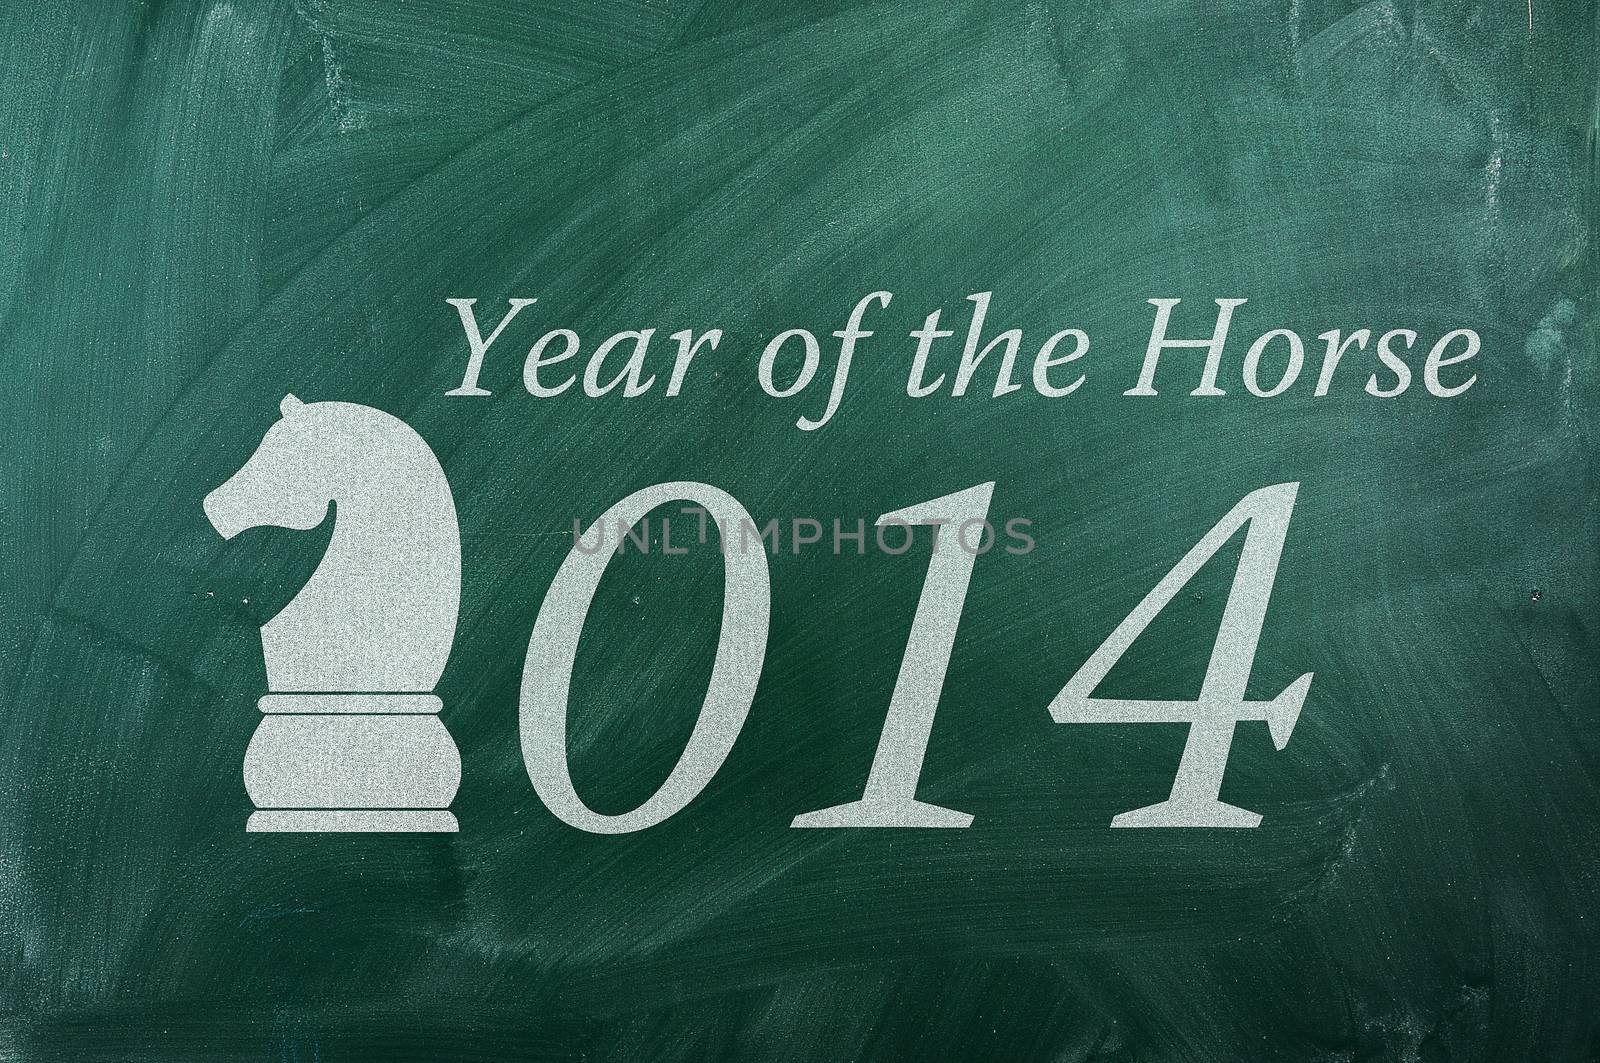 2014  year of the Horse on green ghalkboard